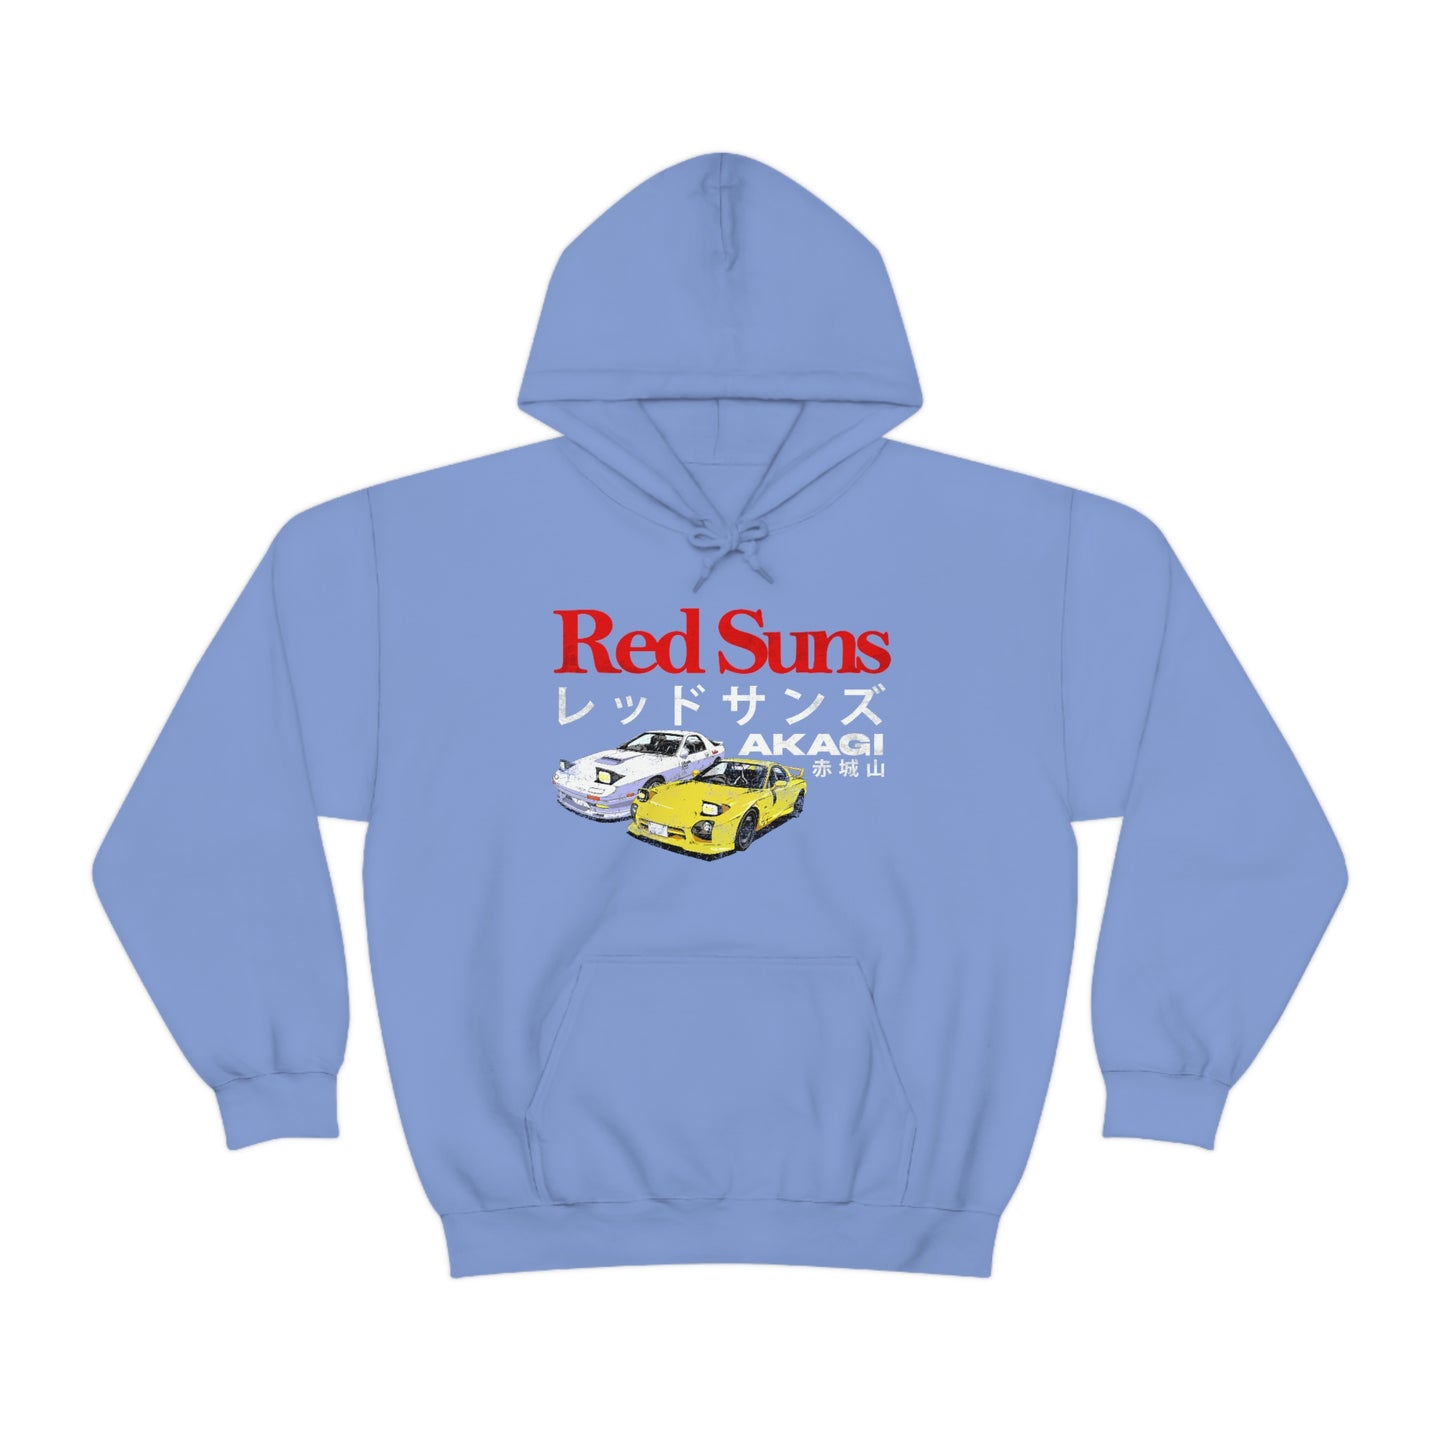 Akagis RedSuns hoodie JDM Racing Drifting Race D shirt